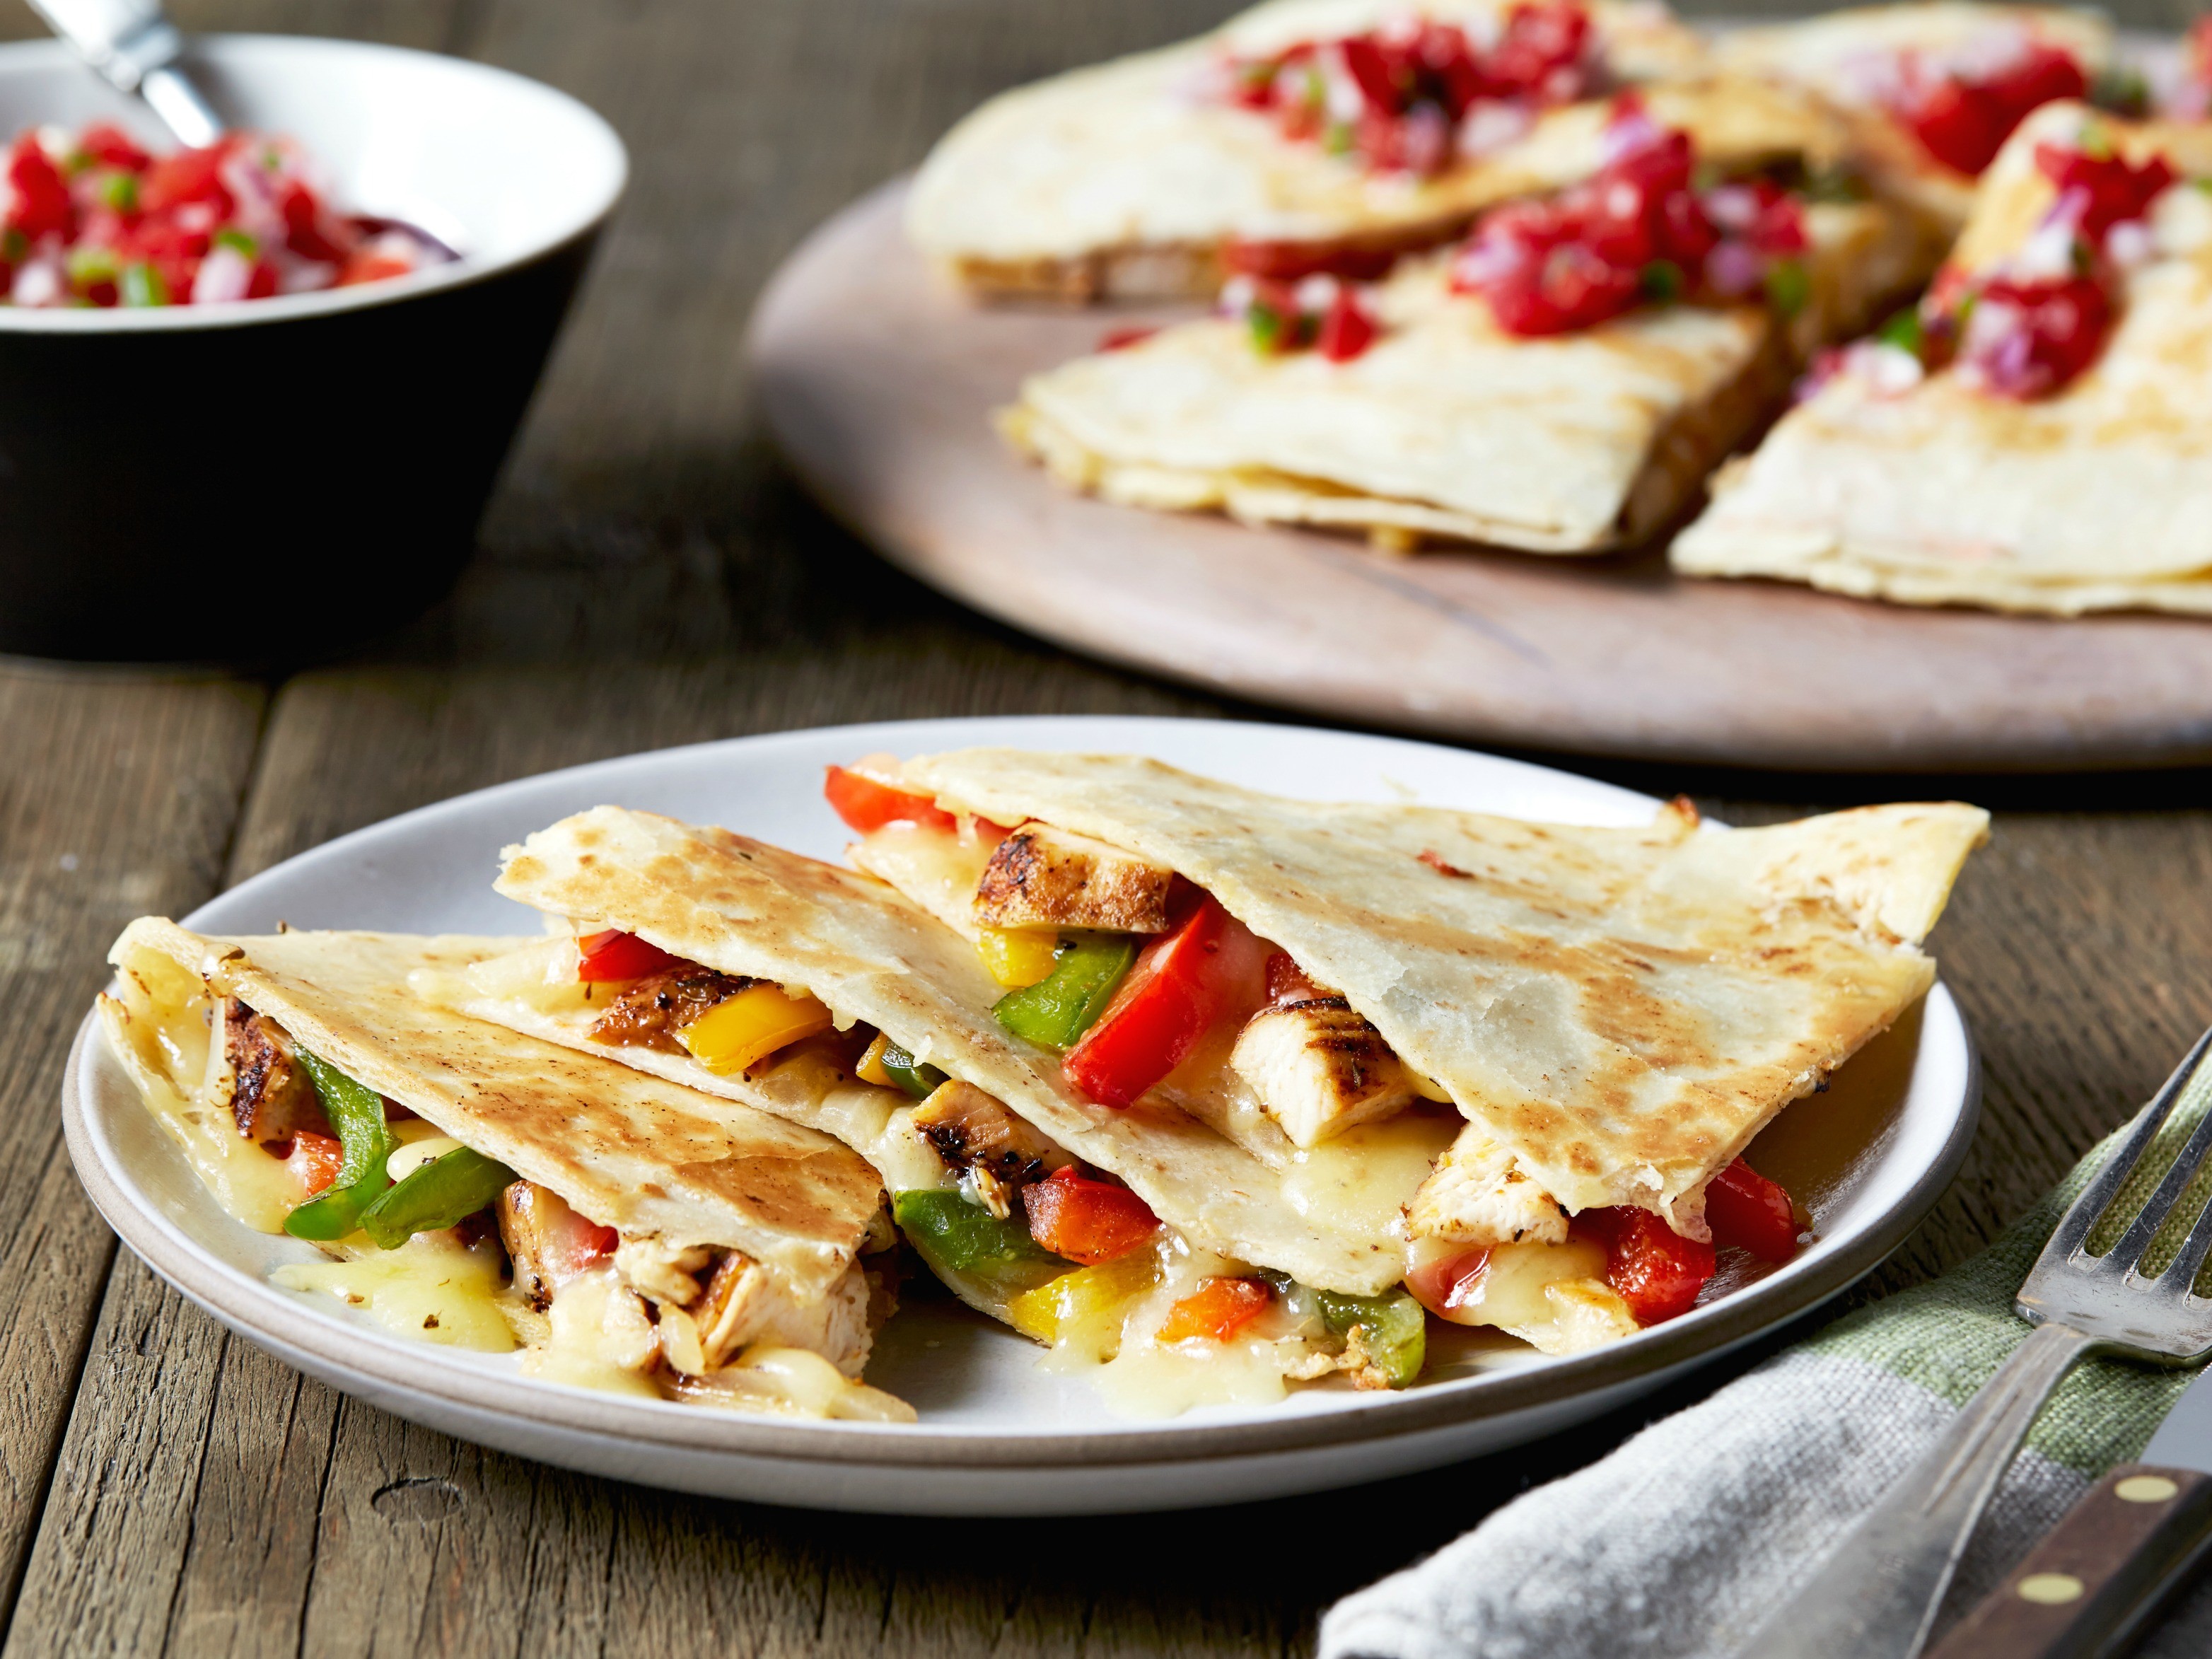 https://food.cld.sndimg.com/image/upload/c_fill/v1/fn_core_images/food/fullset/2013/2/5/1/WU0404H_chicken-quesadillas-recipe_s4x3.jpg